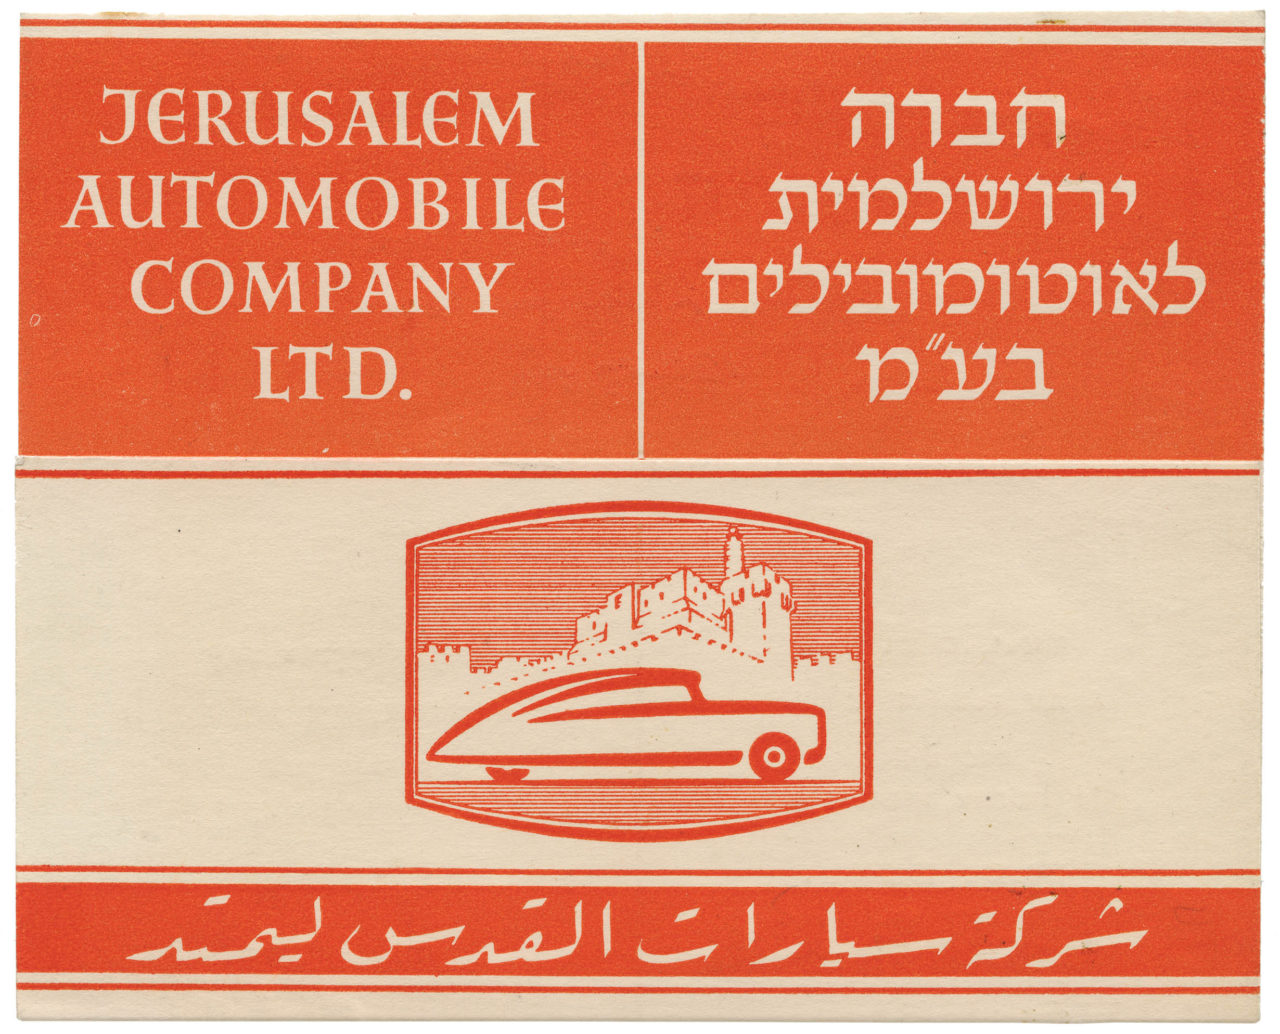 Jerusalem Automobile Company Ltd.